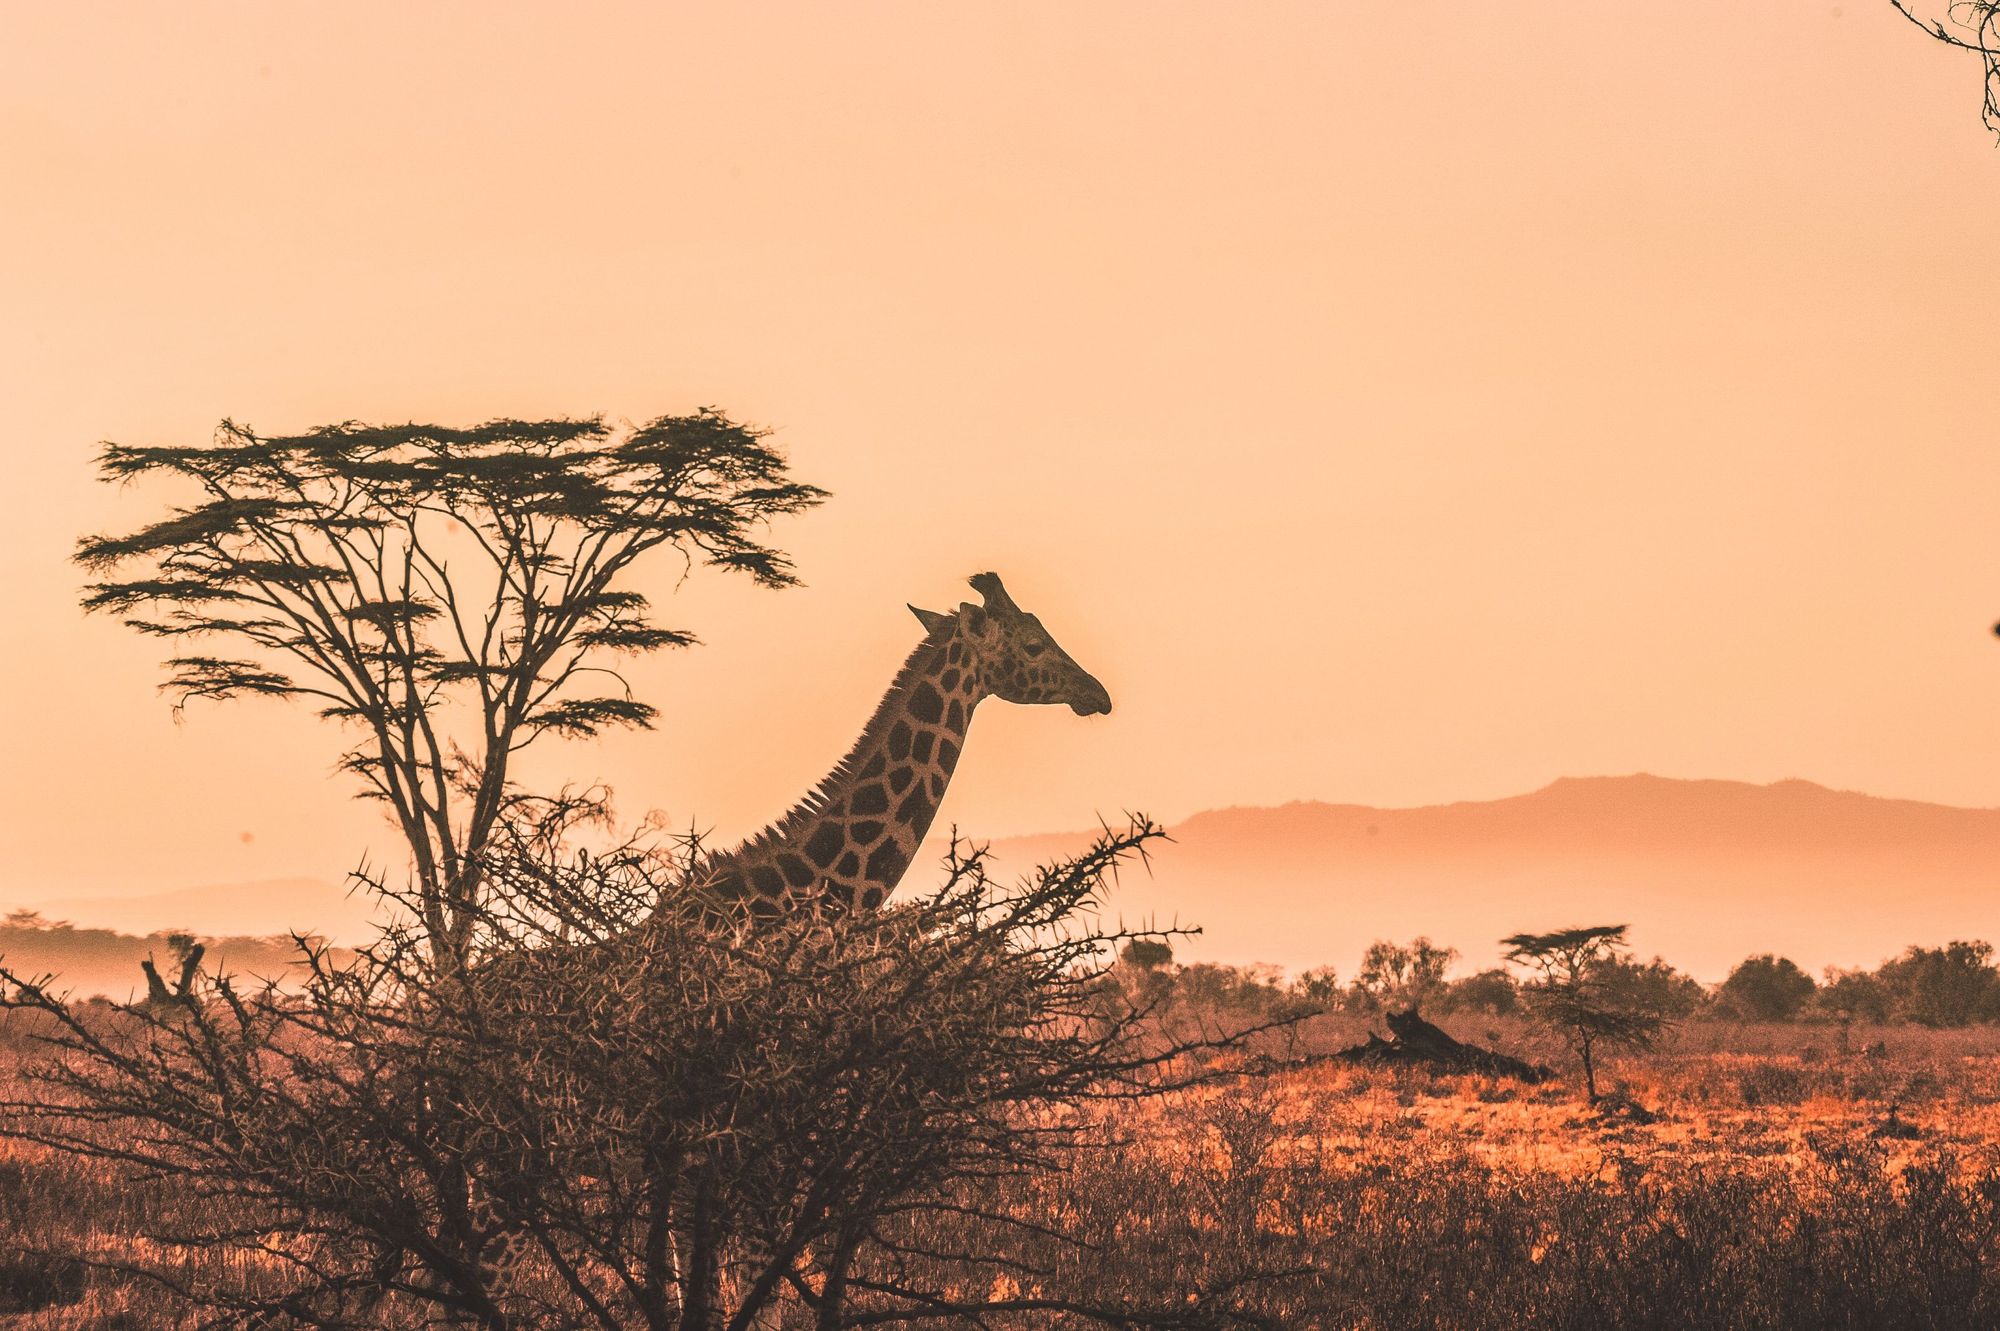 An giraffe walks across the plains, with a backdrop of the sun setting in the Masai Mara. hoto: Harshil Gudka / Unsplashed